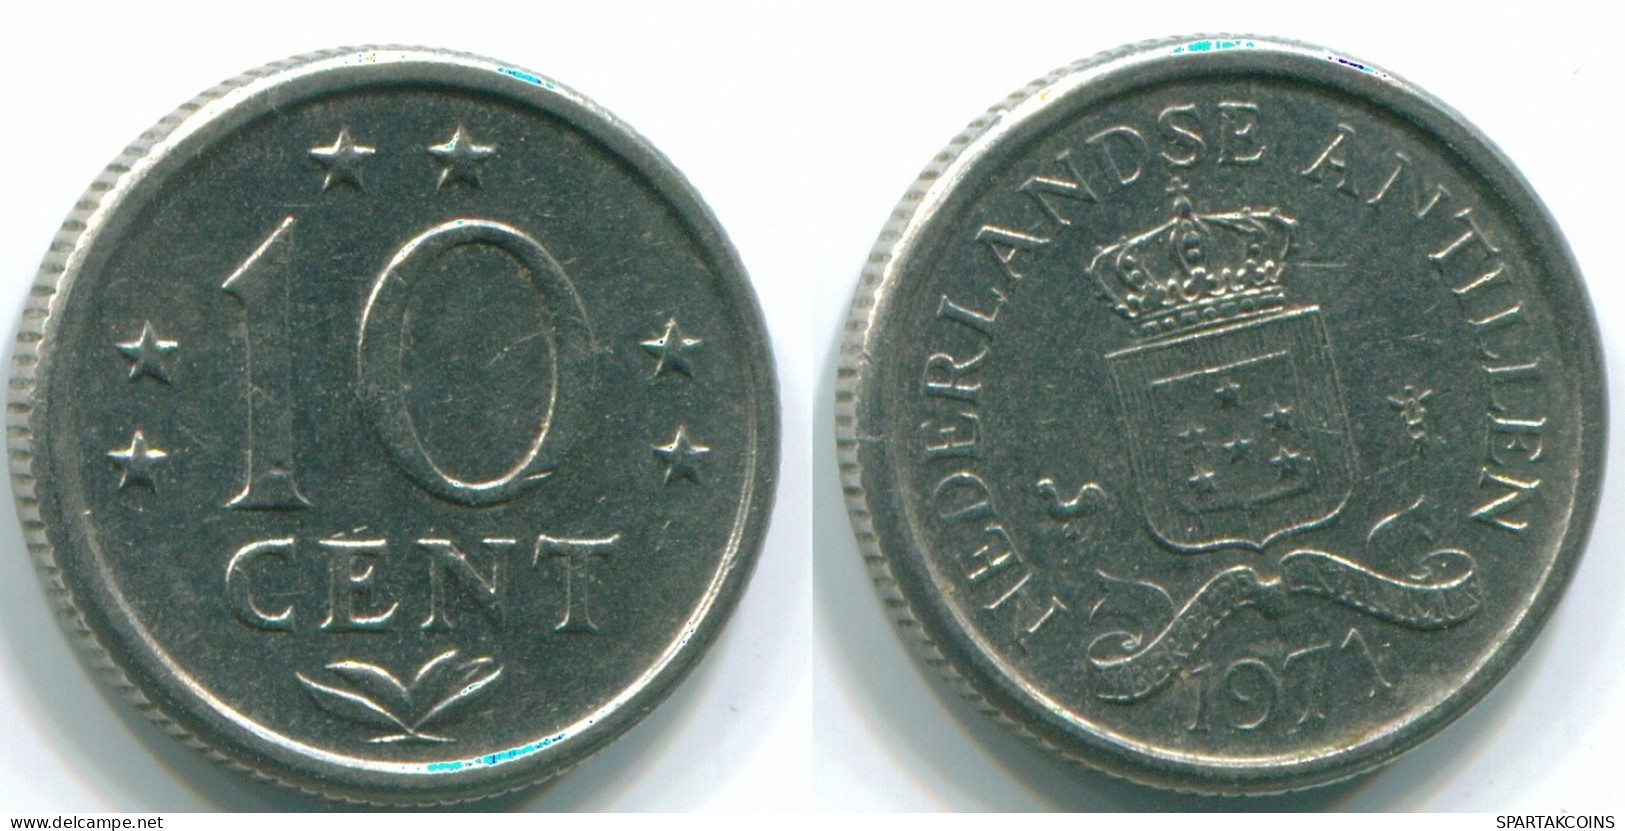 10 CENTS 1971 NETHERLANDS ANTILLES Nickel Colonial Coin #S13452.U.A - Nederlandse Antillen